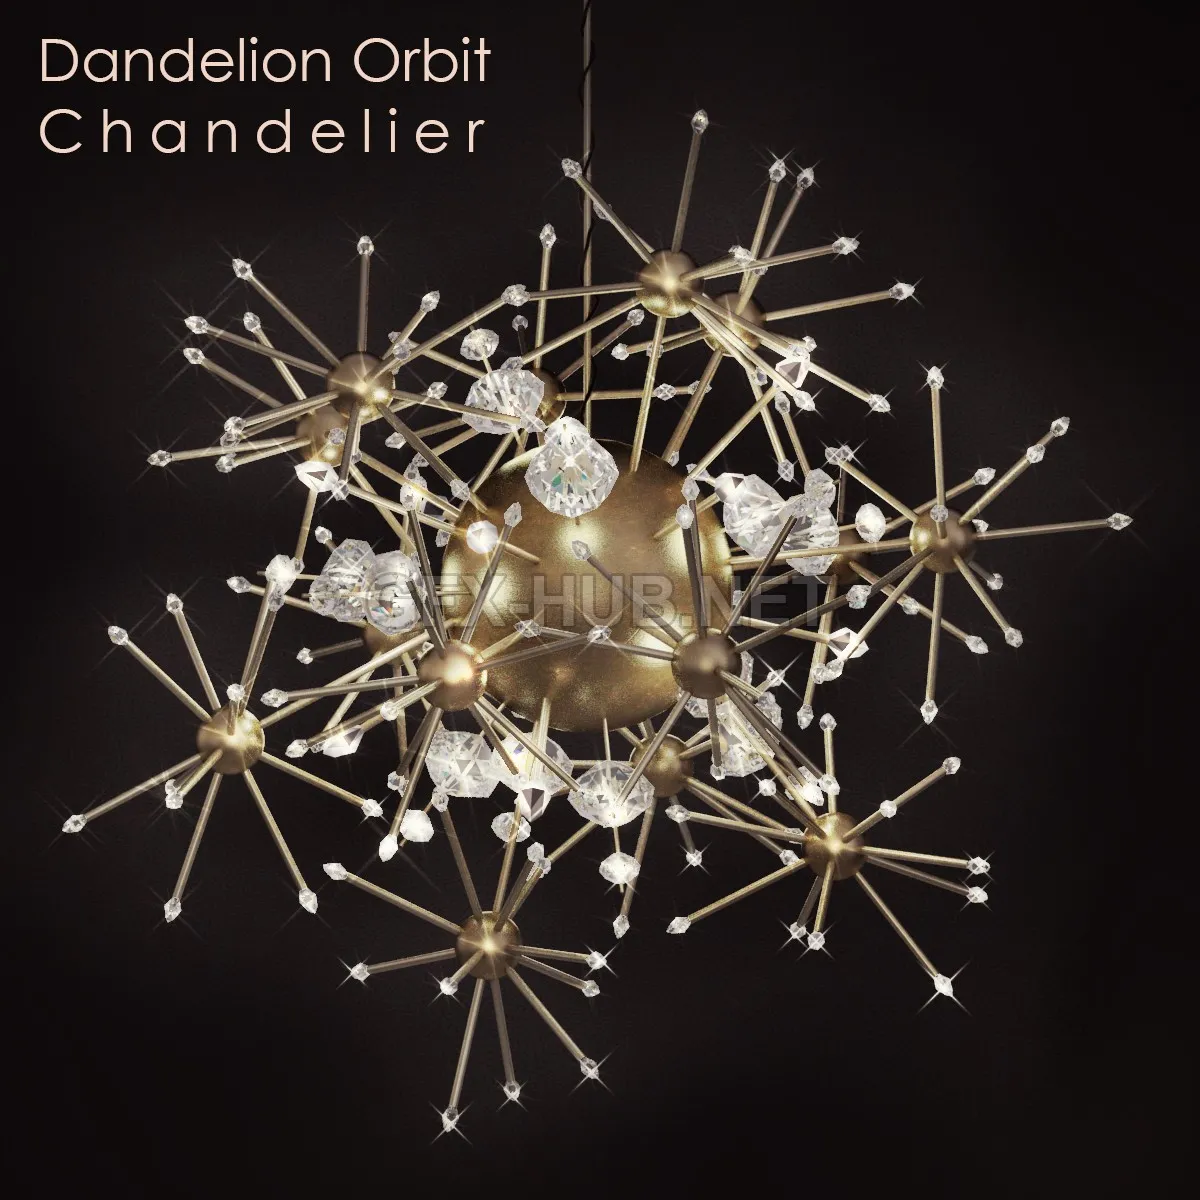 FURNITURE 3D MODELS – Dandelion Orbit Chandelier